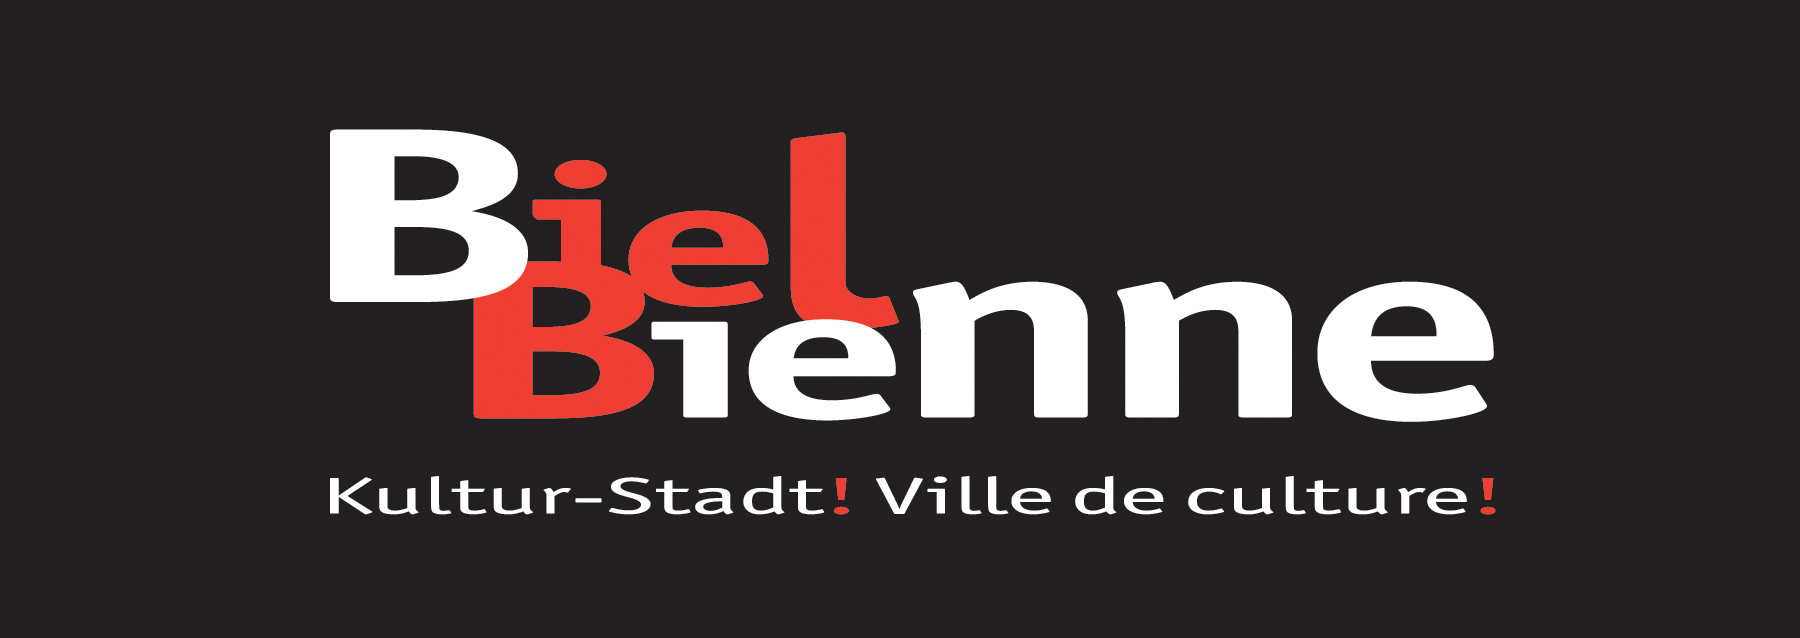 Logo BielBienne_SCREEN_Kultur_Culture_farbig_couleur.jpg